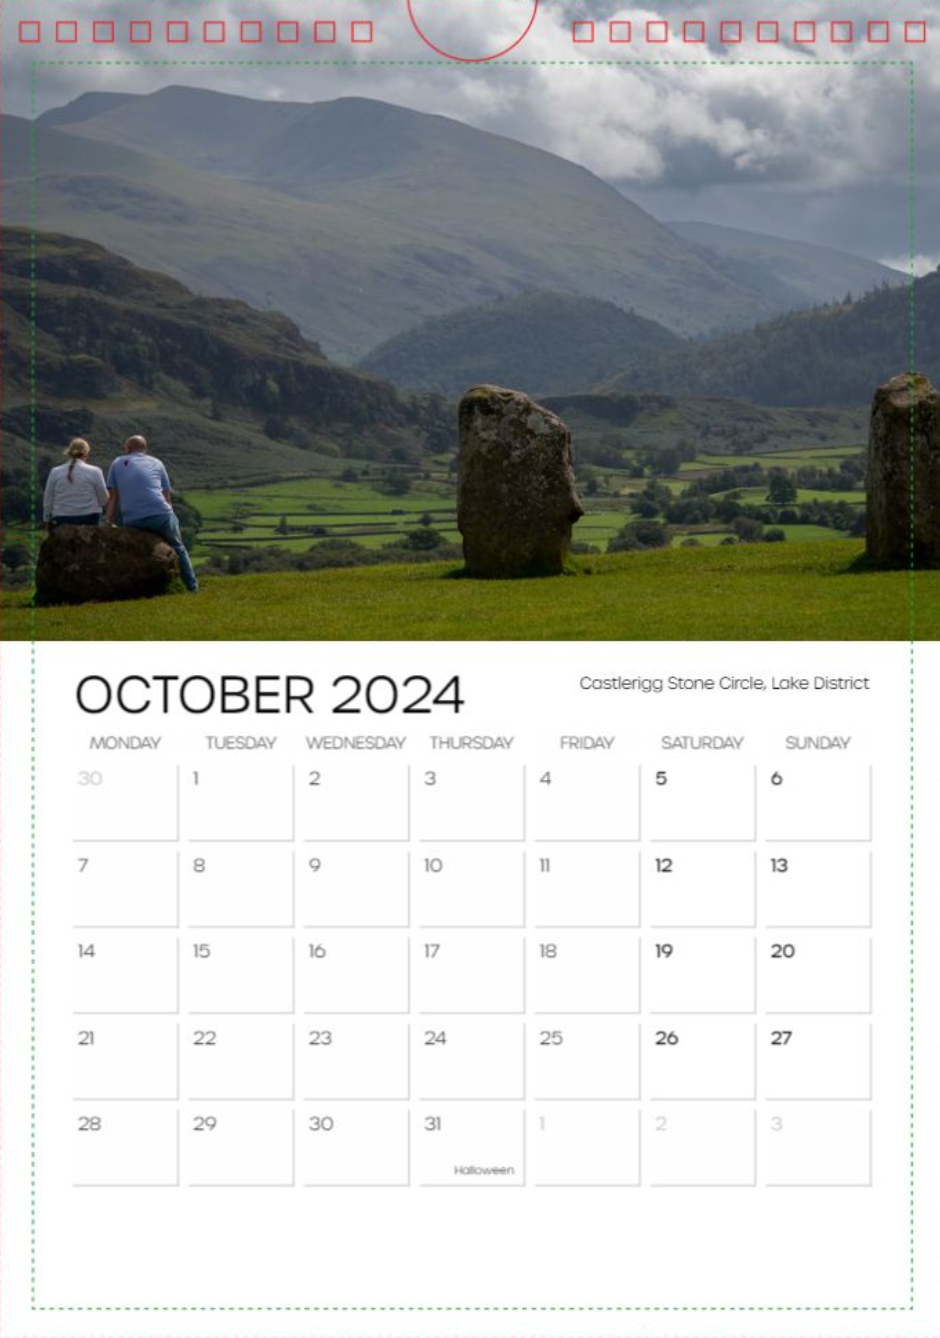 Photographic Calendar 2024 - October